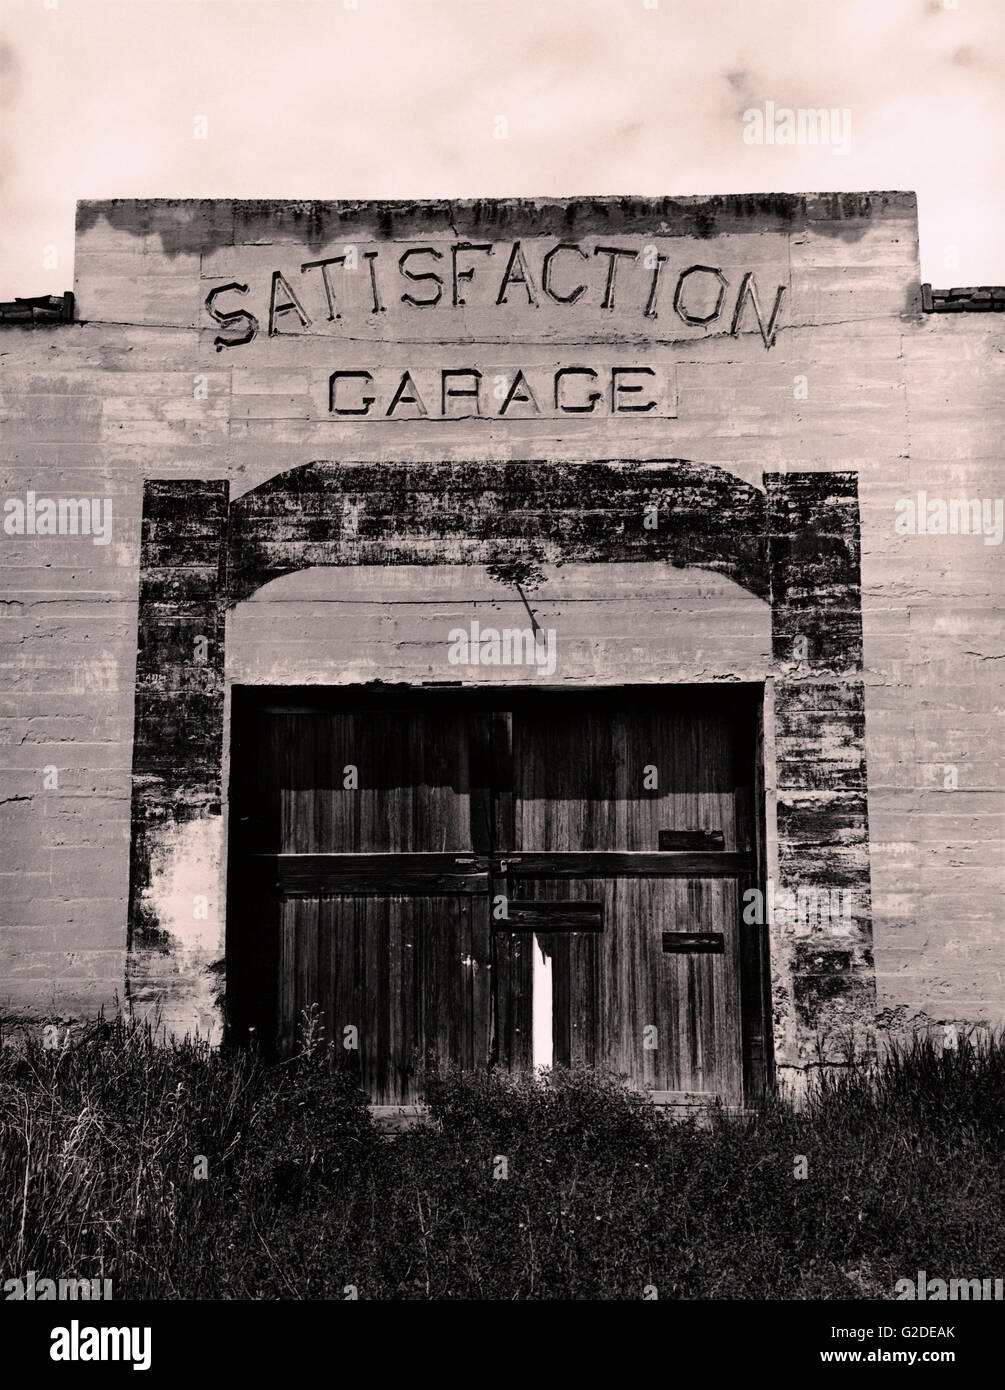 Ancien garage Satisfaction Banque D'Images